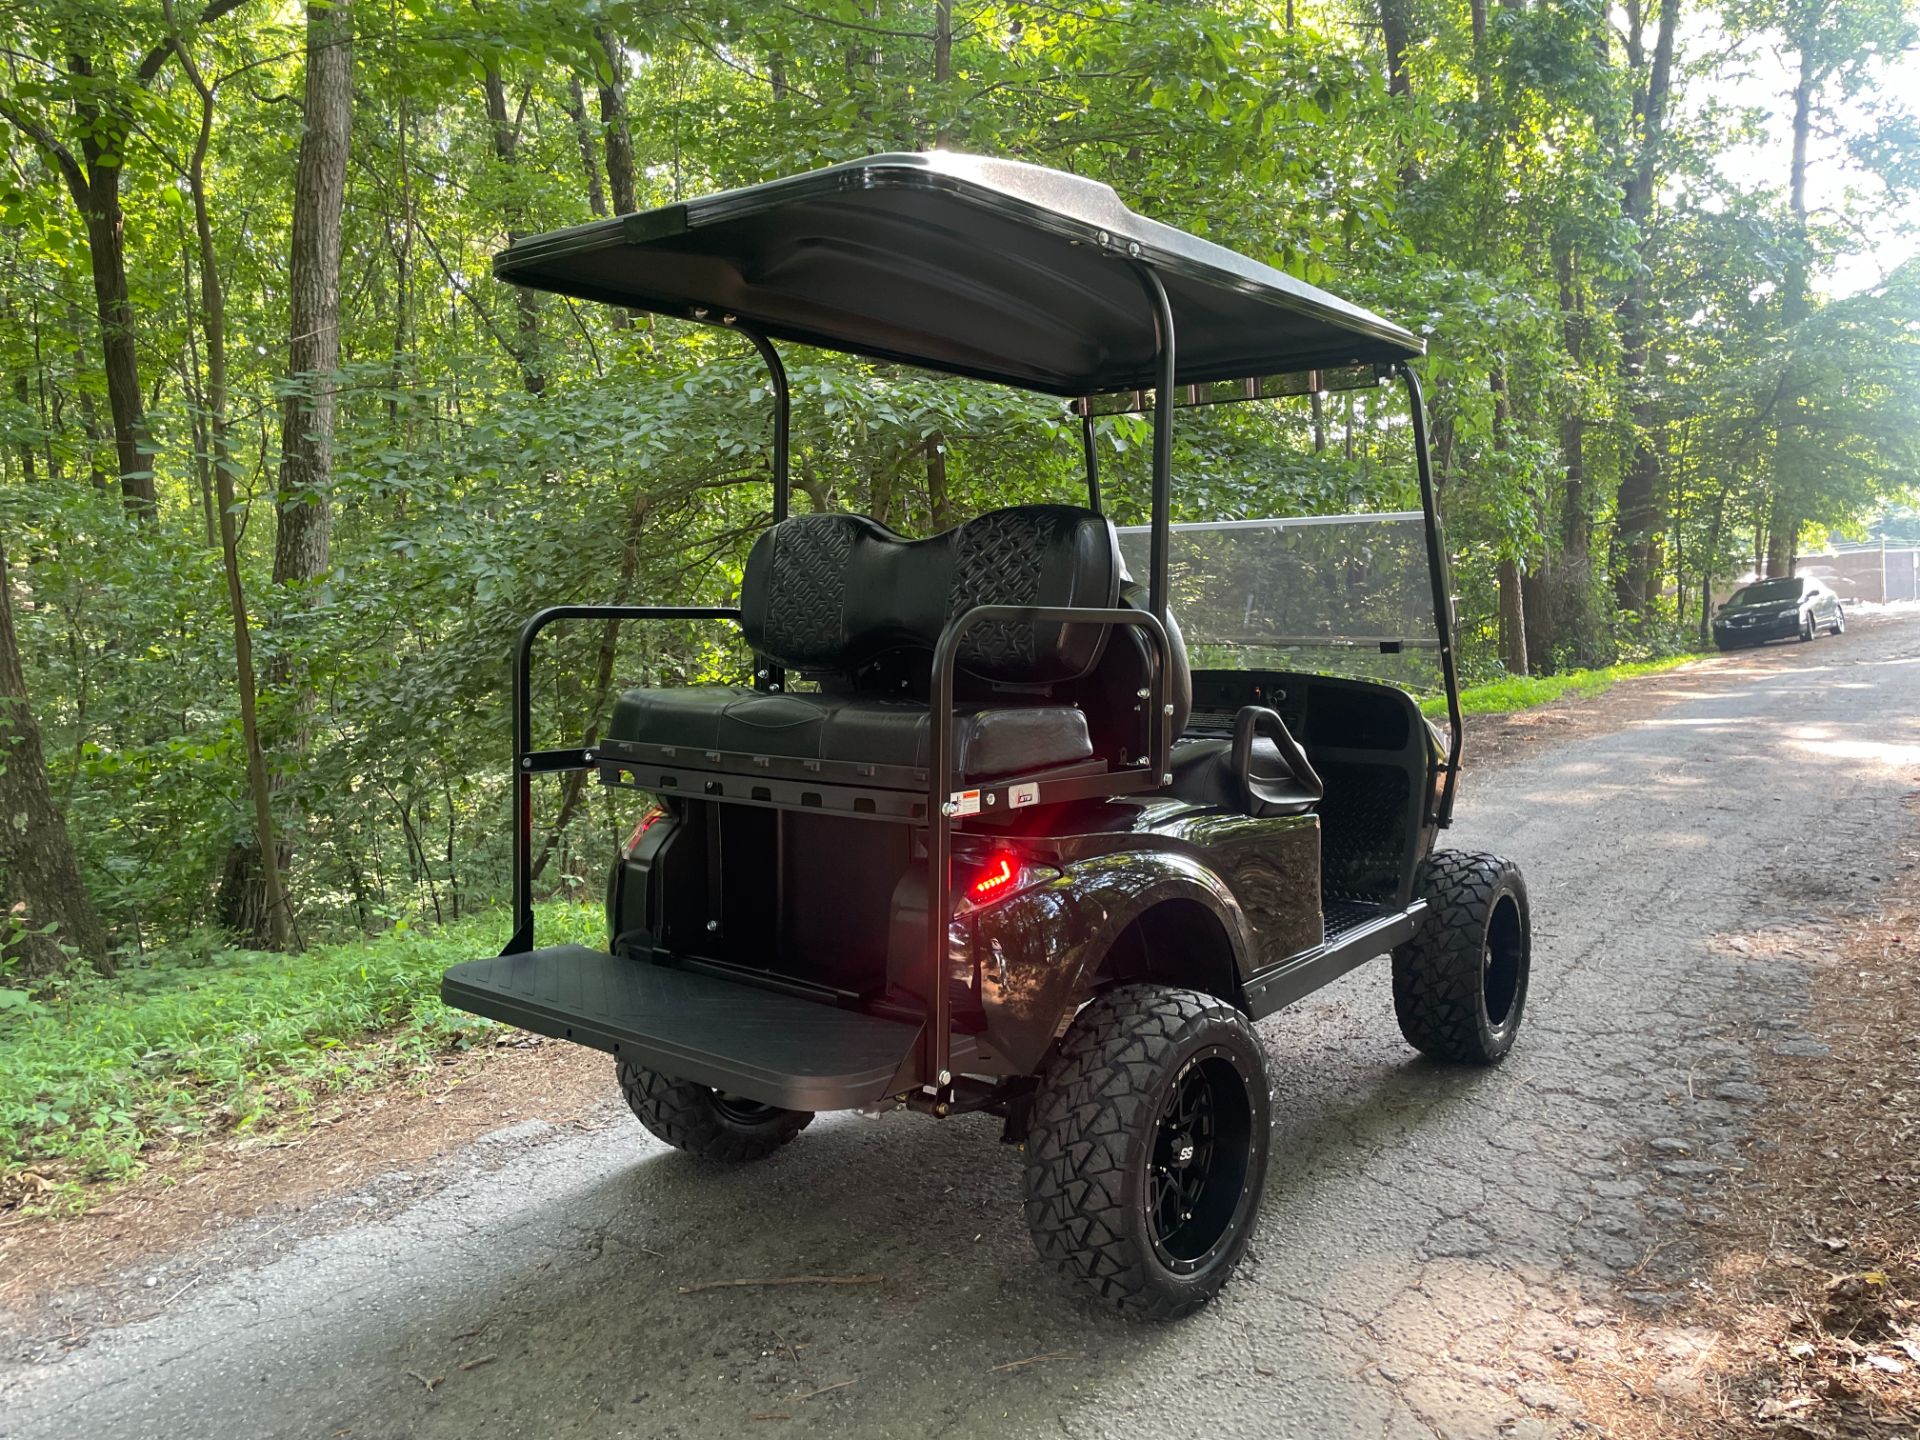 2022 NAVITAS strom 48v lithium electric golf cart 25+ mph in Woodstock, Georgia - Photo 4